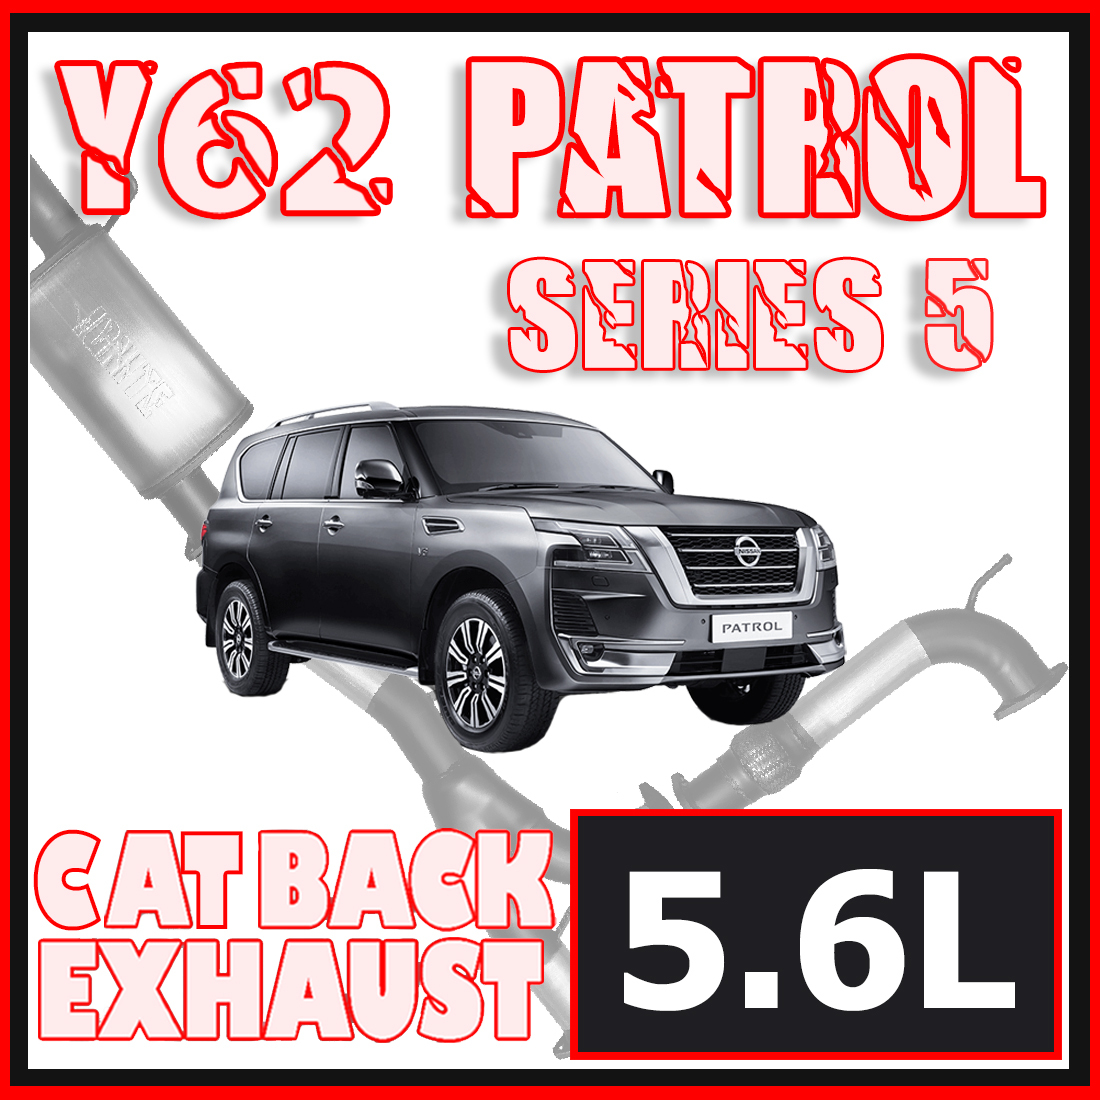 Nissan Y62 Series 5 Patrol SUV 5.6L Ignite Exhaust image